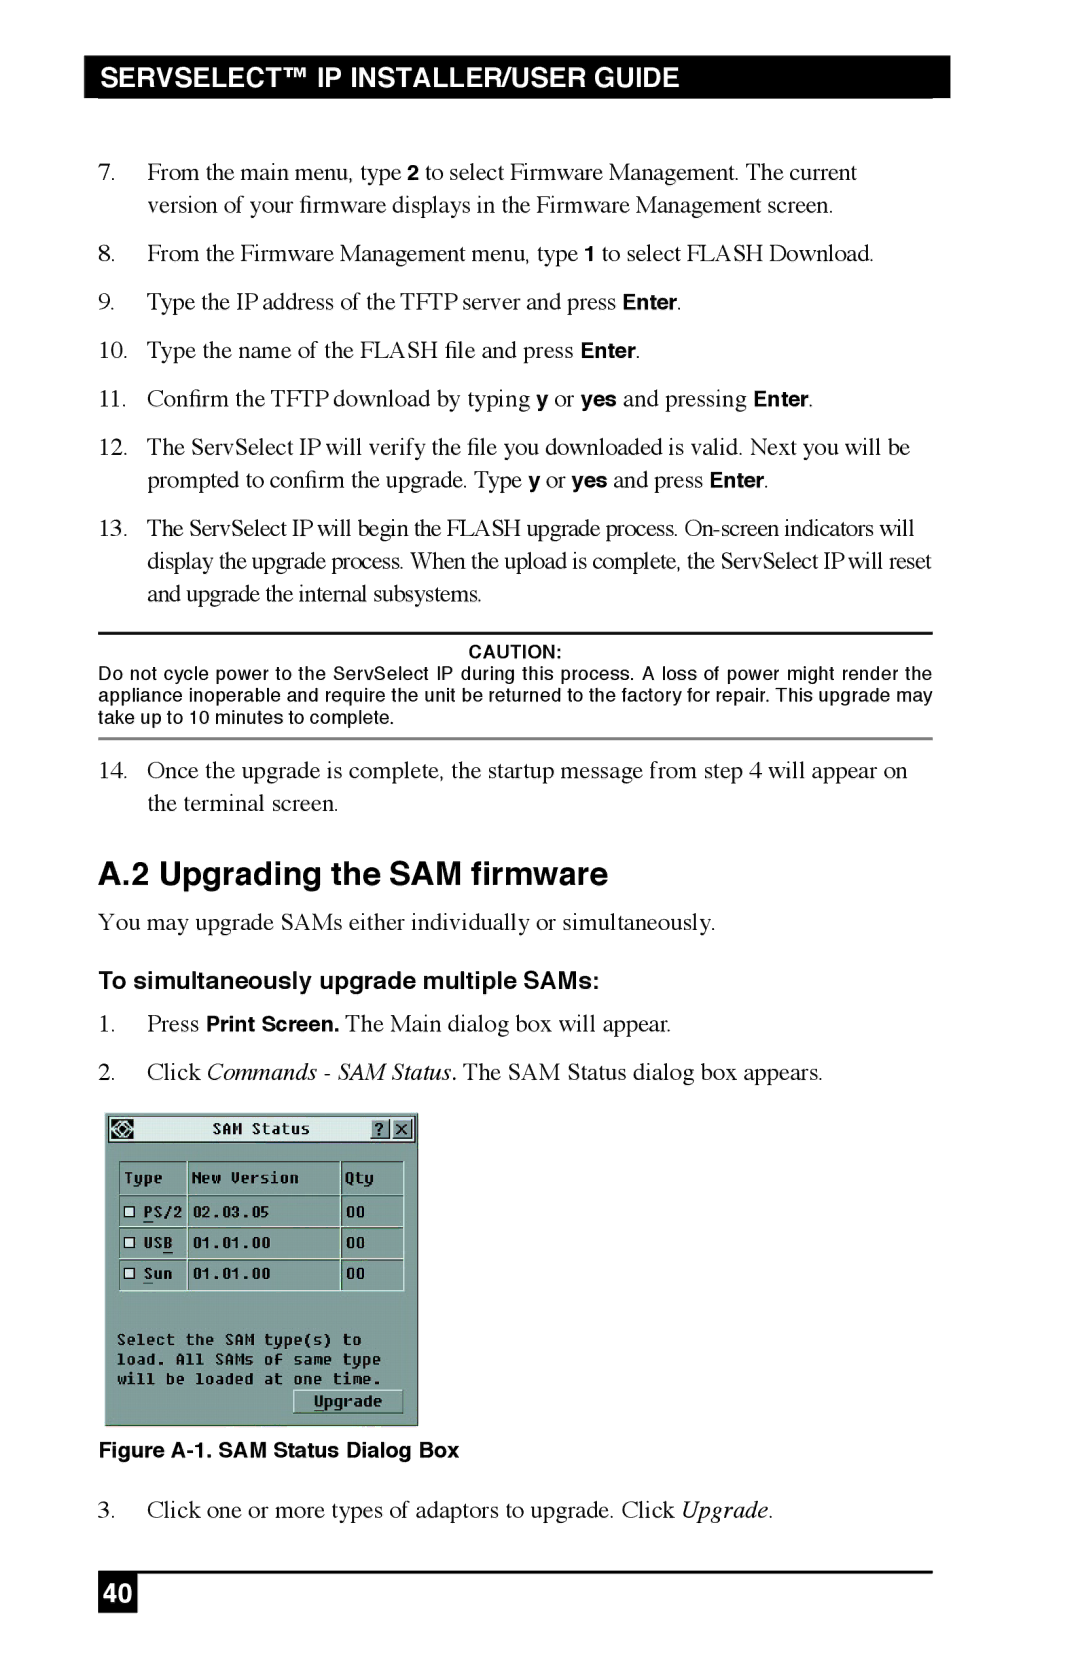 Black Box KV212E, KV120E, KV120A manual Upgrading the SAM firmware, To simultaneously upgrade multiple SAMs 